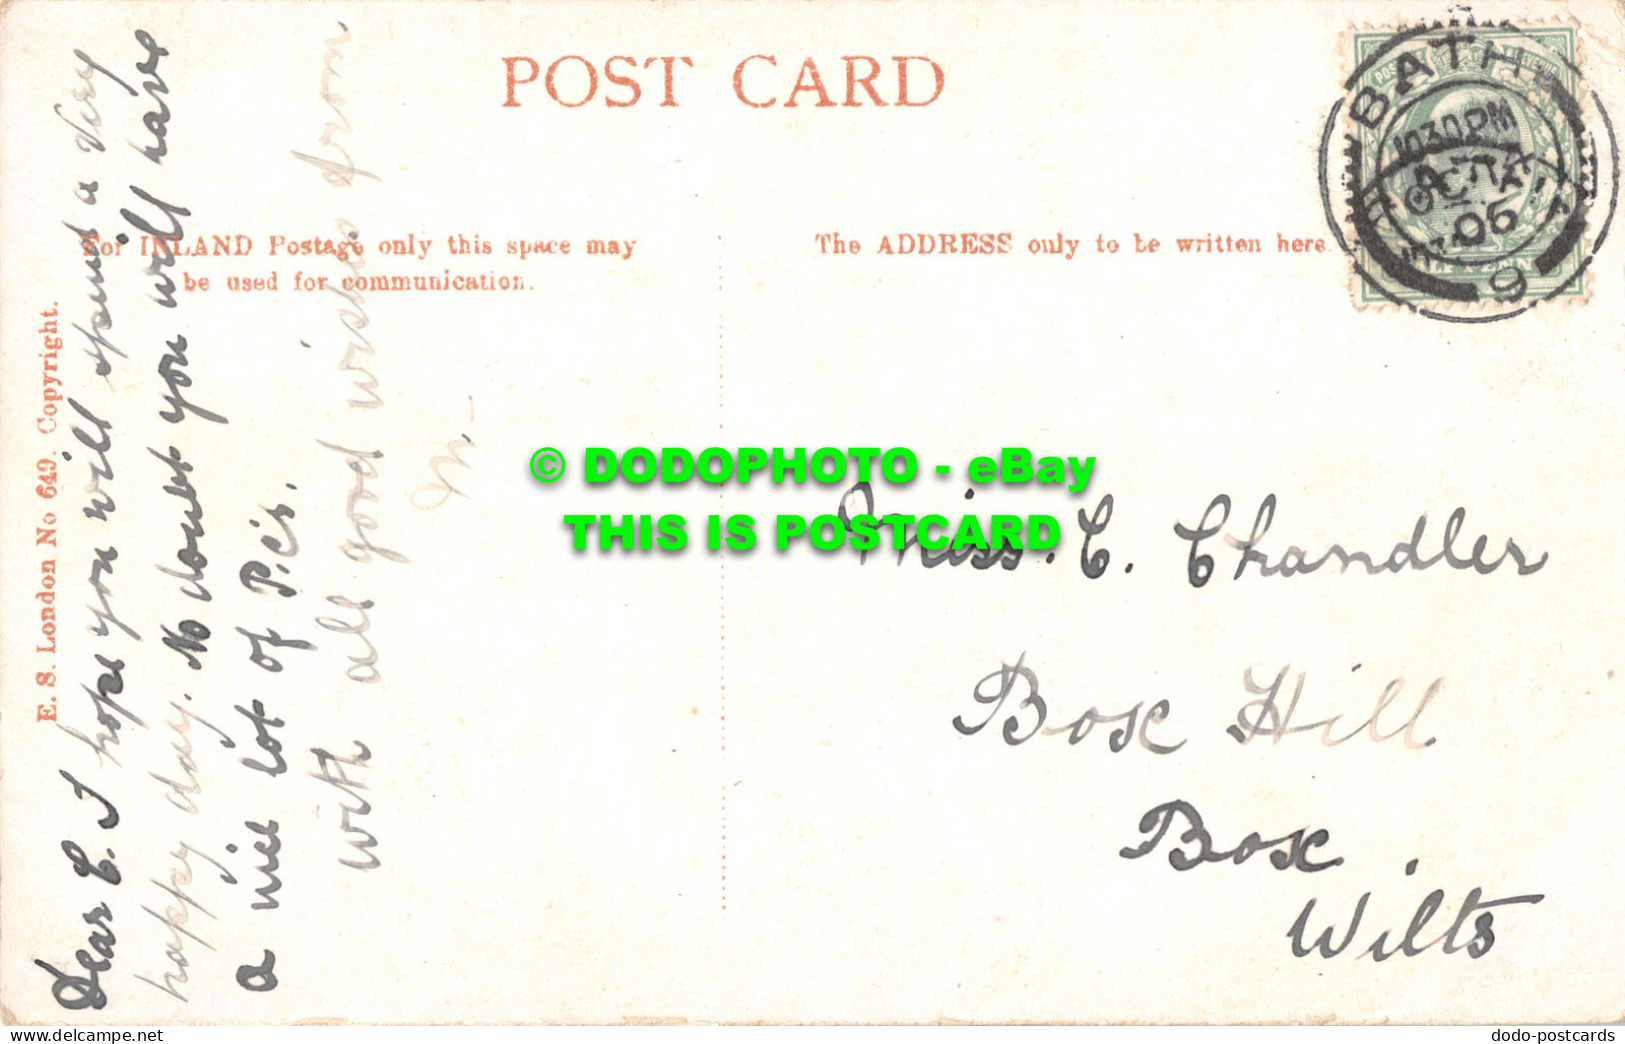 R547028 Bassett Monument On Carn Brae. Redruth. E. S. London. No. 649. 1906 - Autres & Non Classés